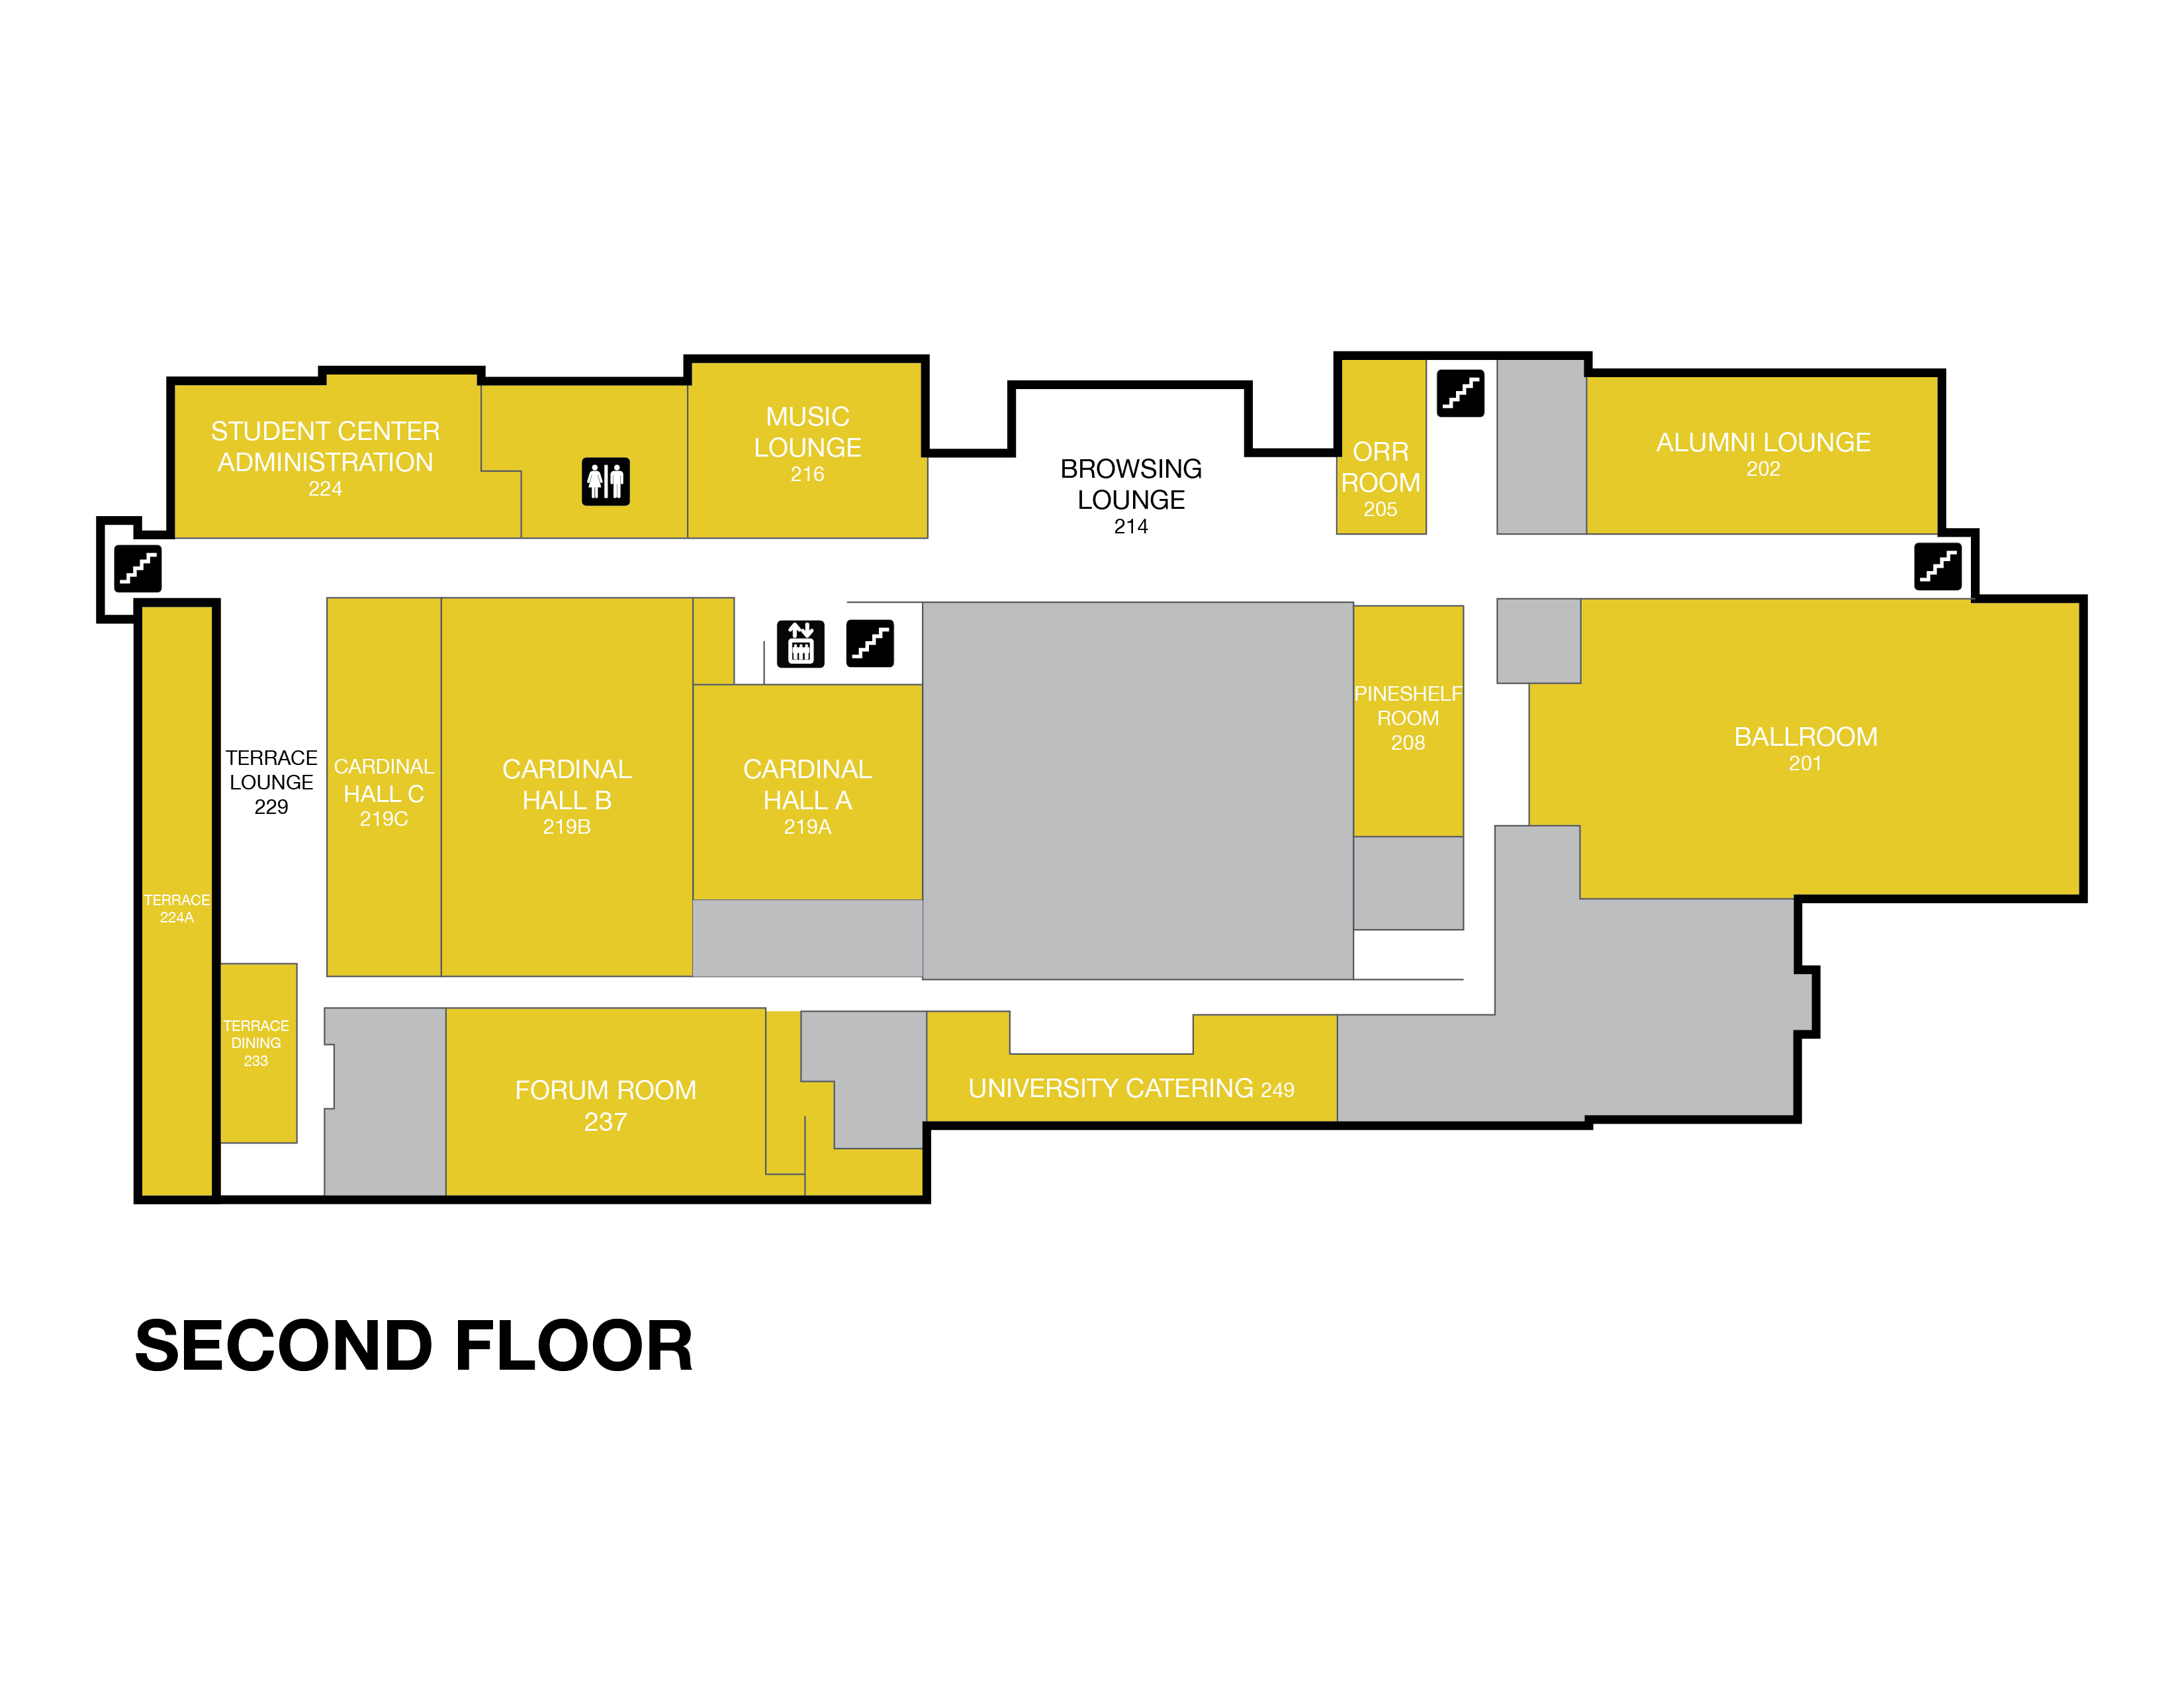 Floor map of the Second Floor Student Center